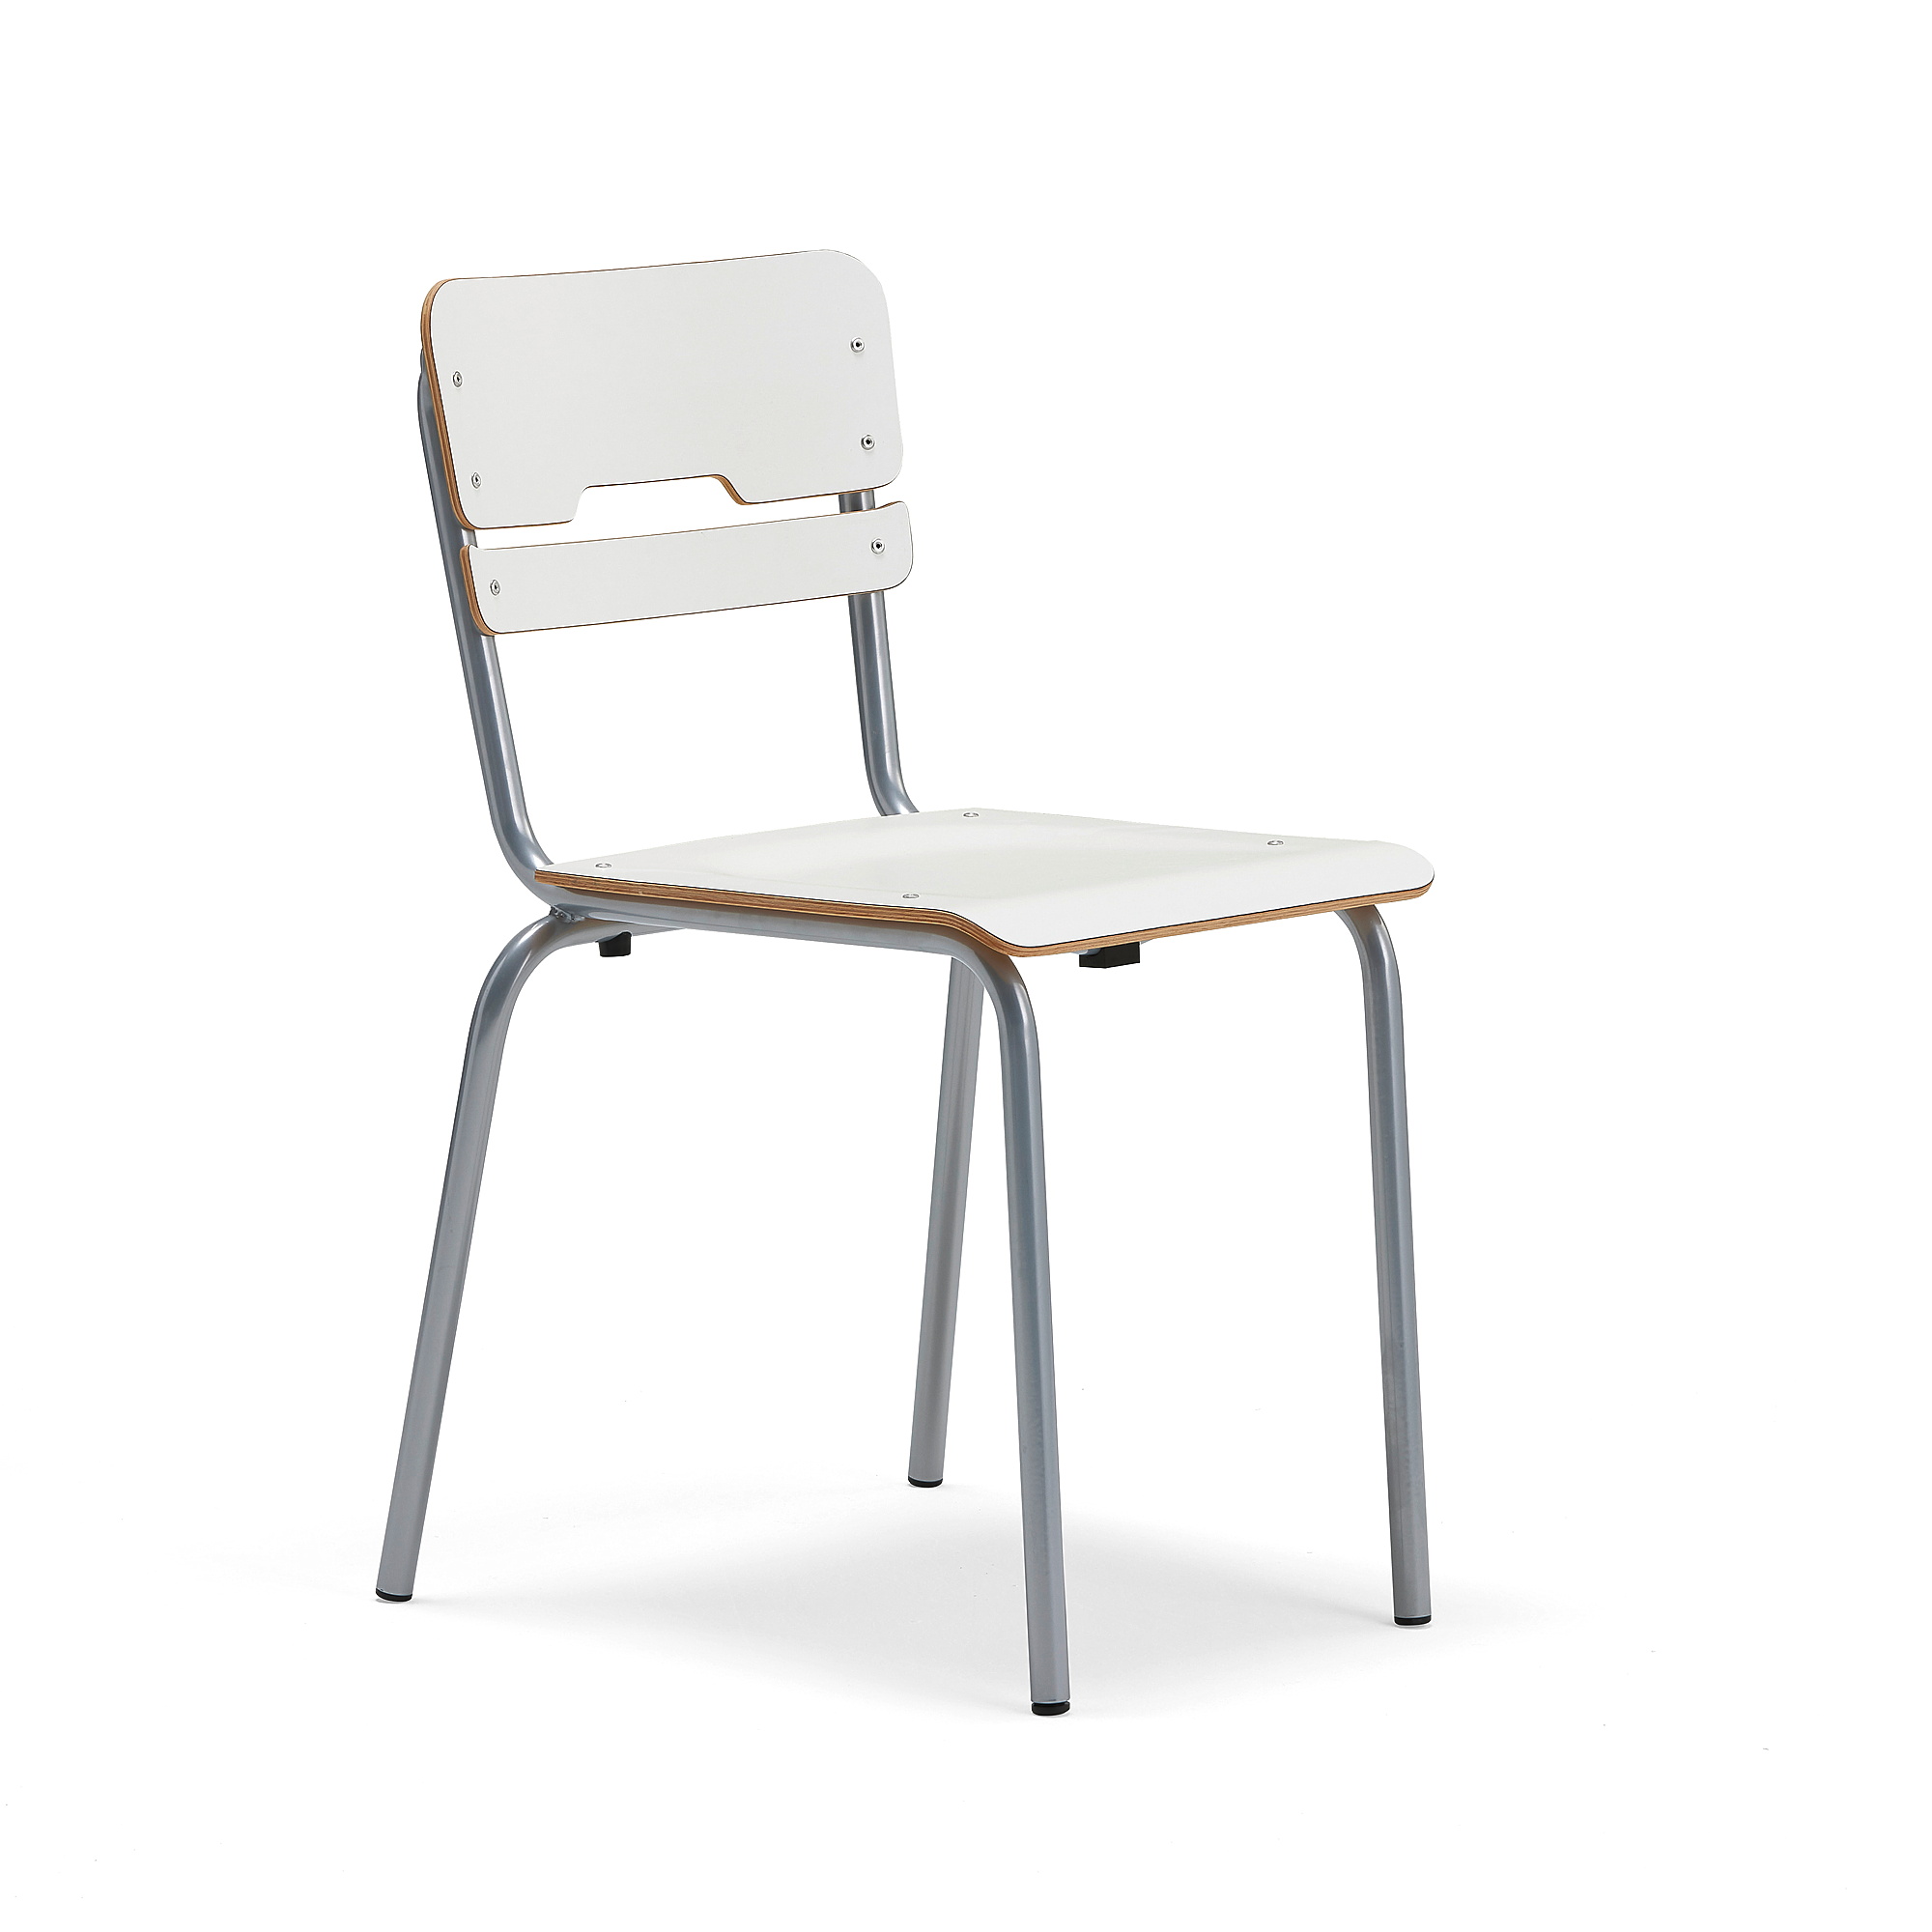 Školní židle SCIENTIA, sedák 390x390 mm, výška 460 mm, stříbrná/bílá